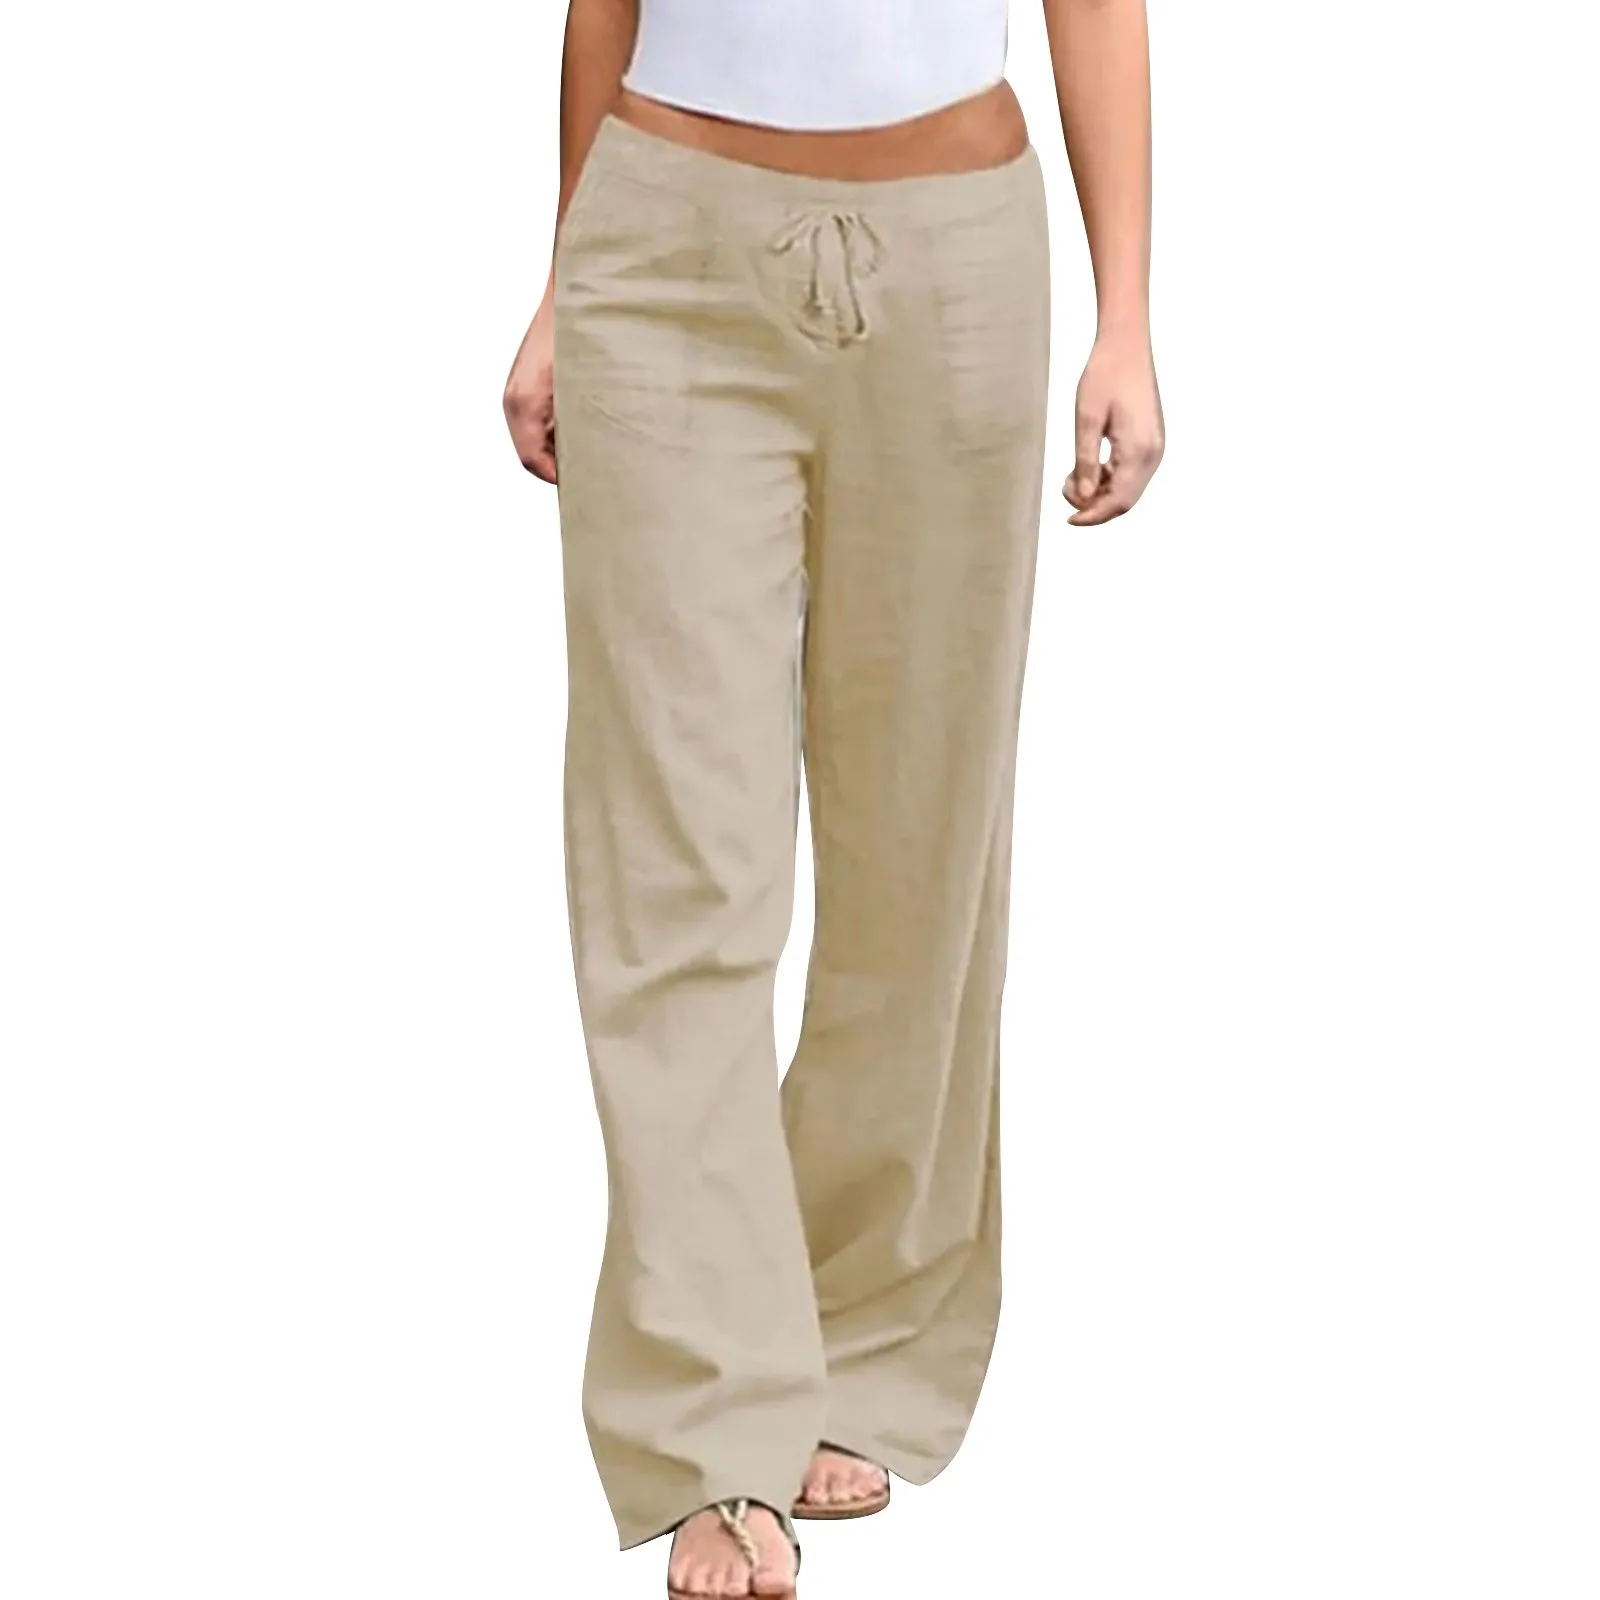  VILIGO Khaki Pants for Women Water Resistant Elastic